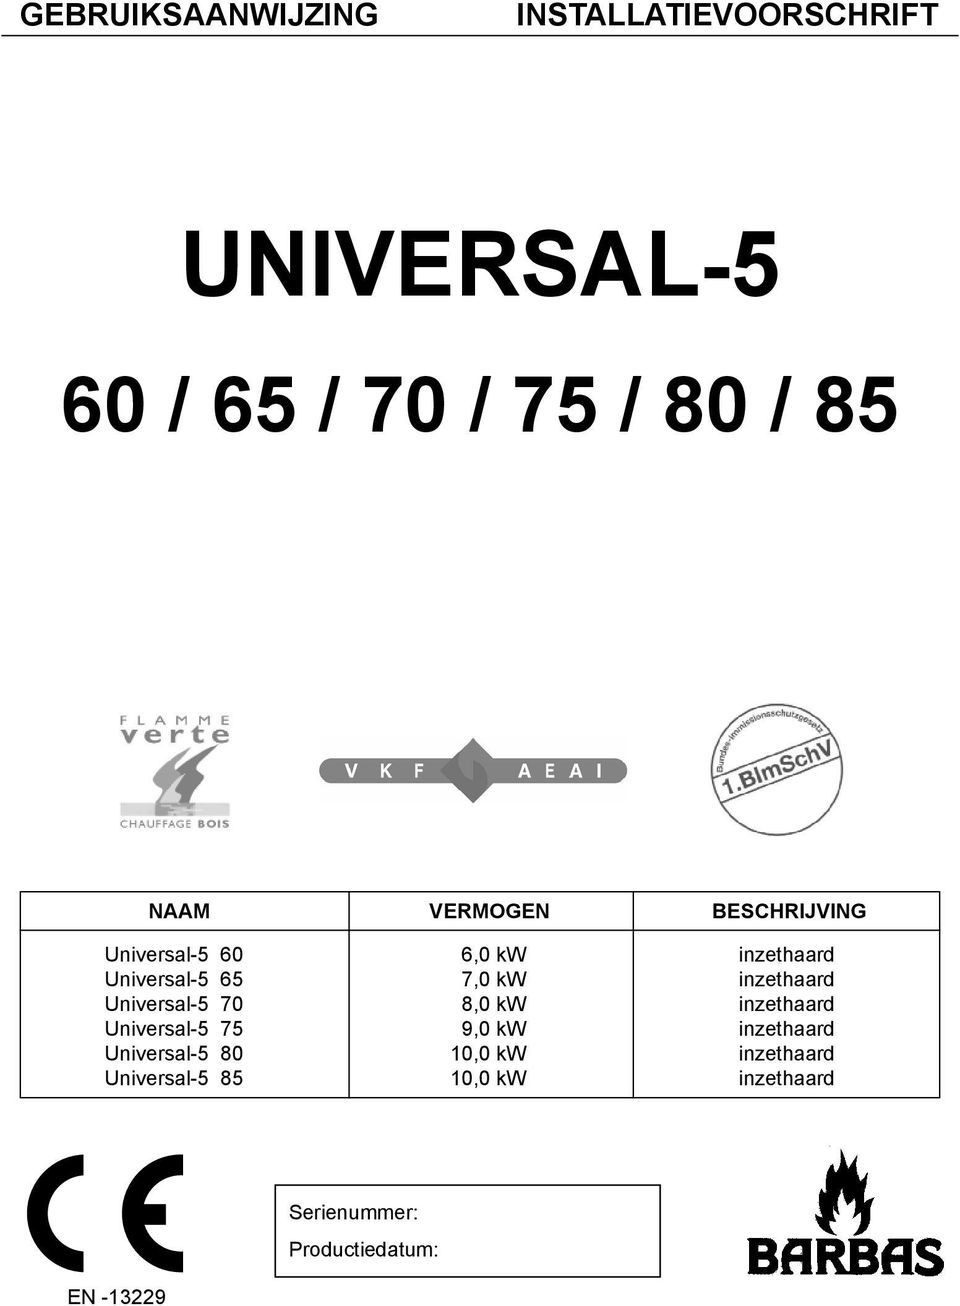 inzethaard Universal-5 70 8,0 kw inzethaard Universal-5 75 9,0 kw inzethaard